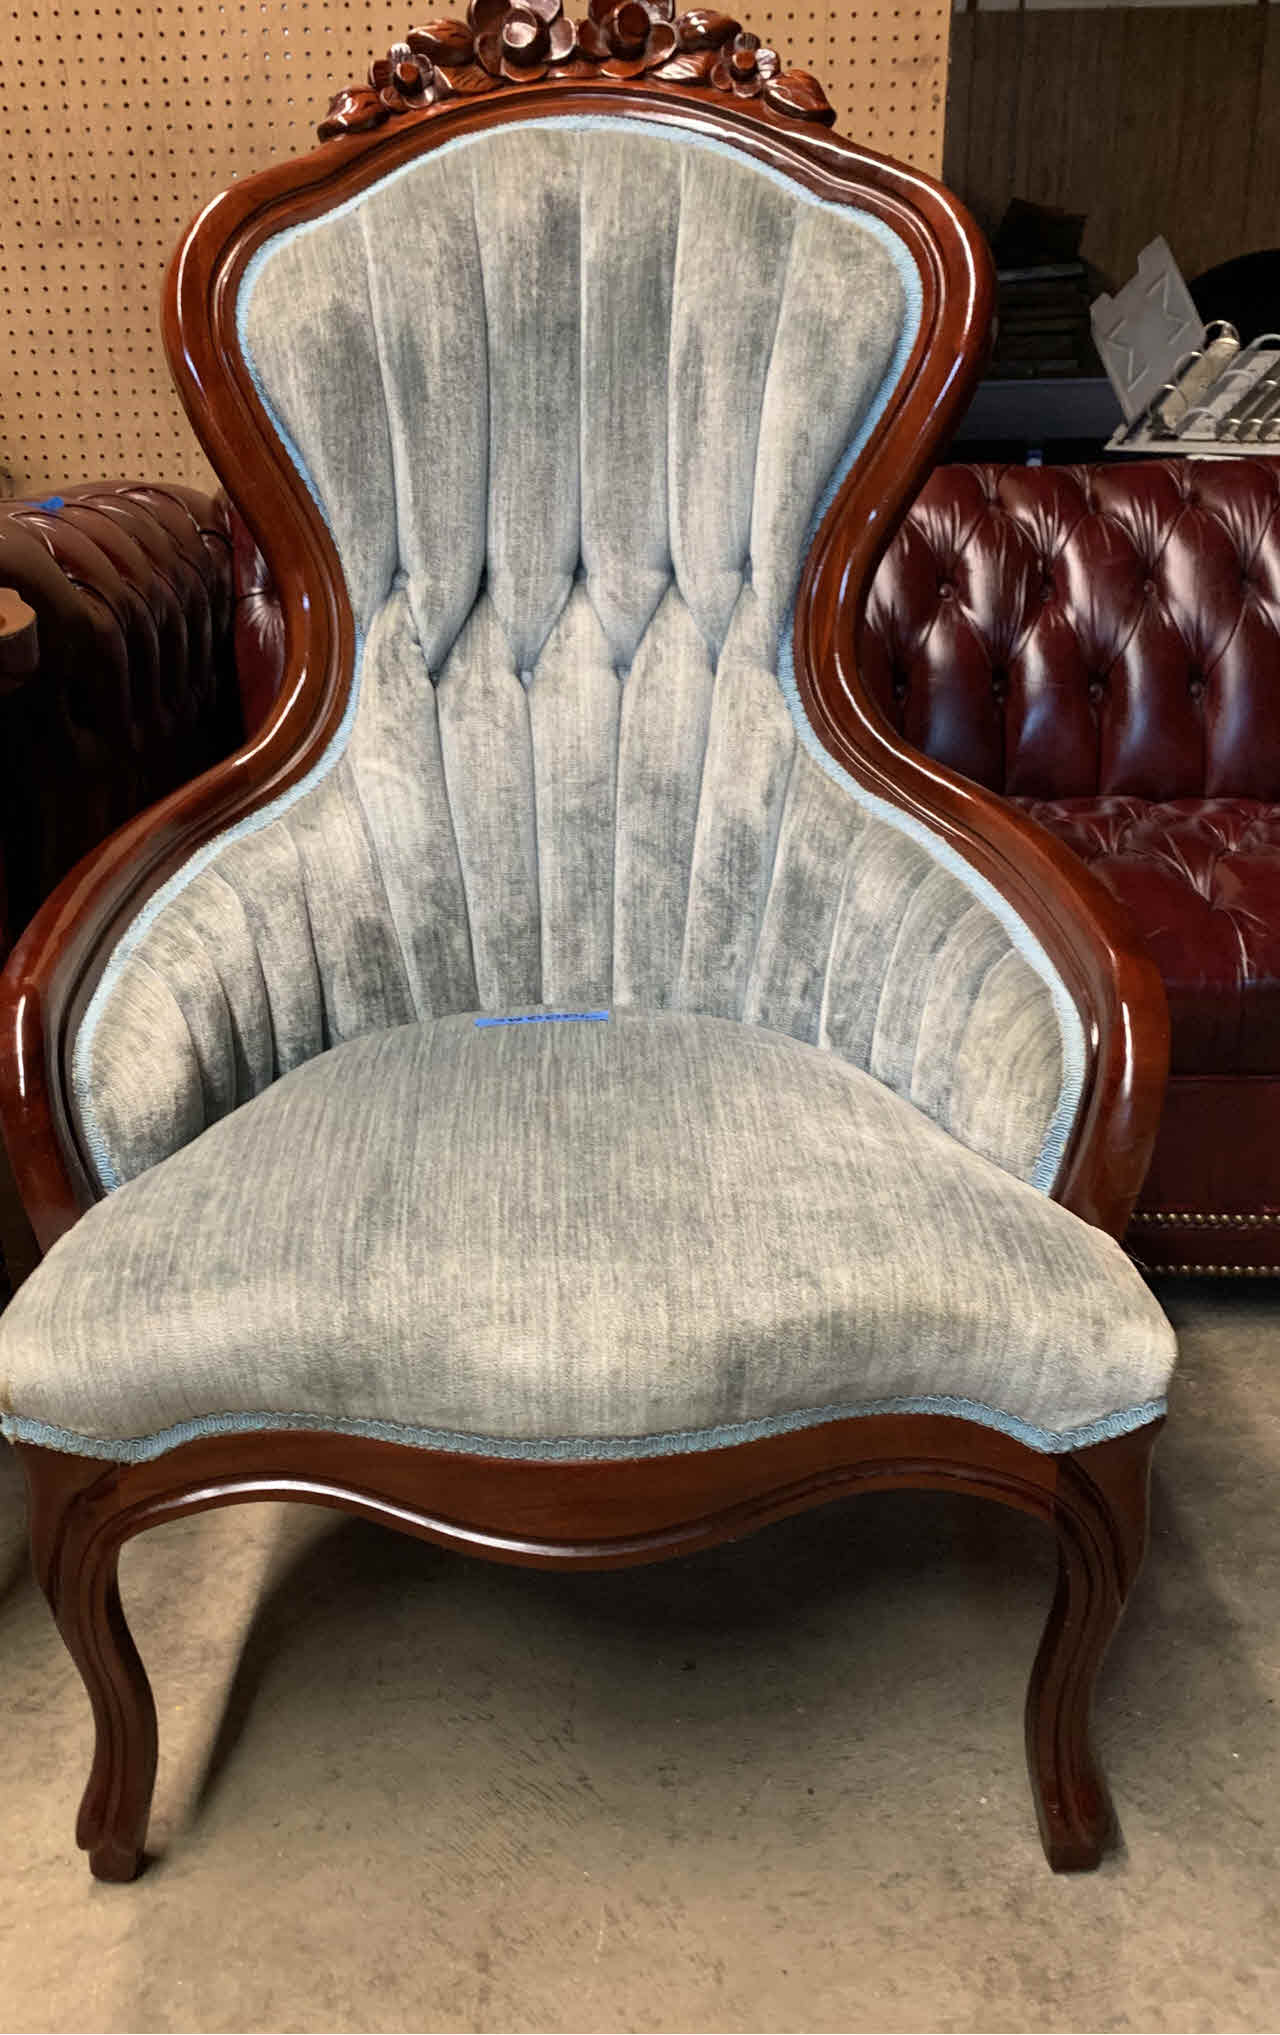 Kimball Vintage Chair For Sale Budville Deals Kentucky Best